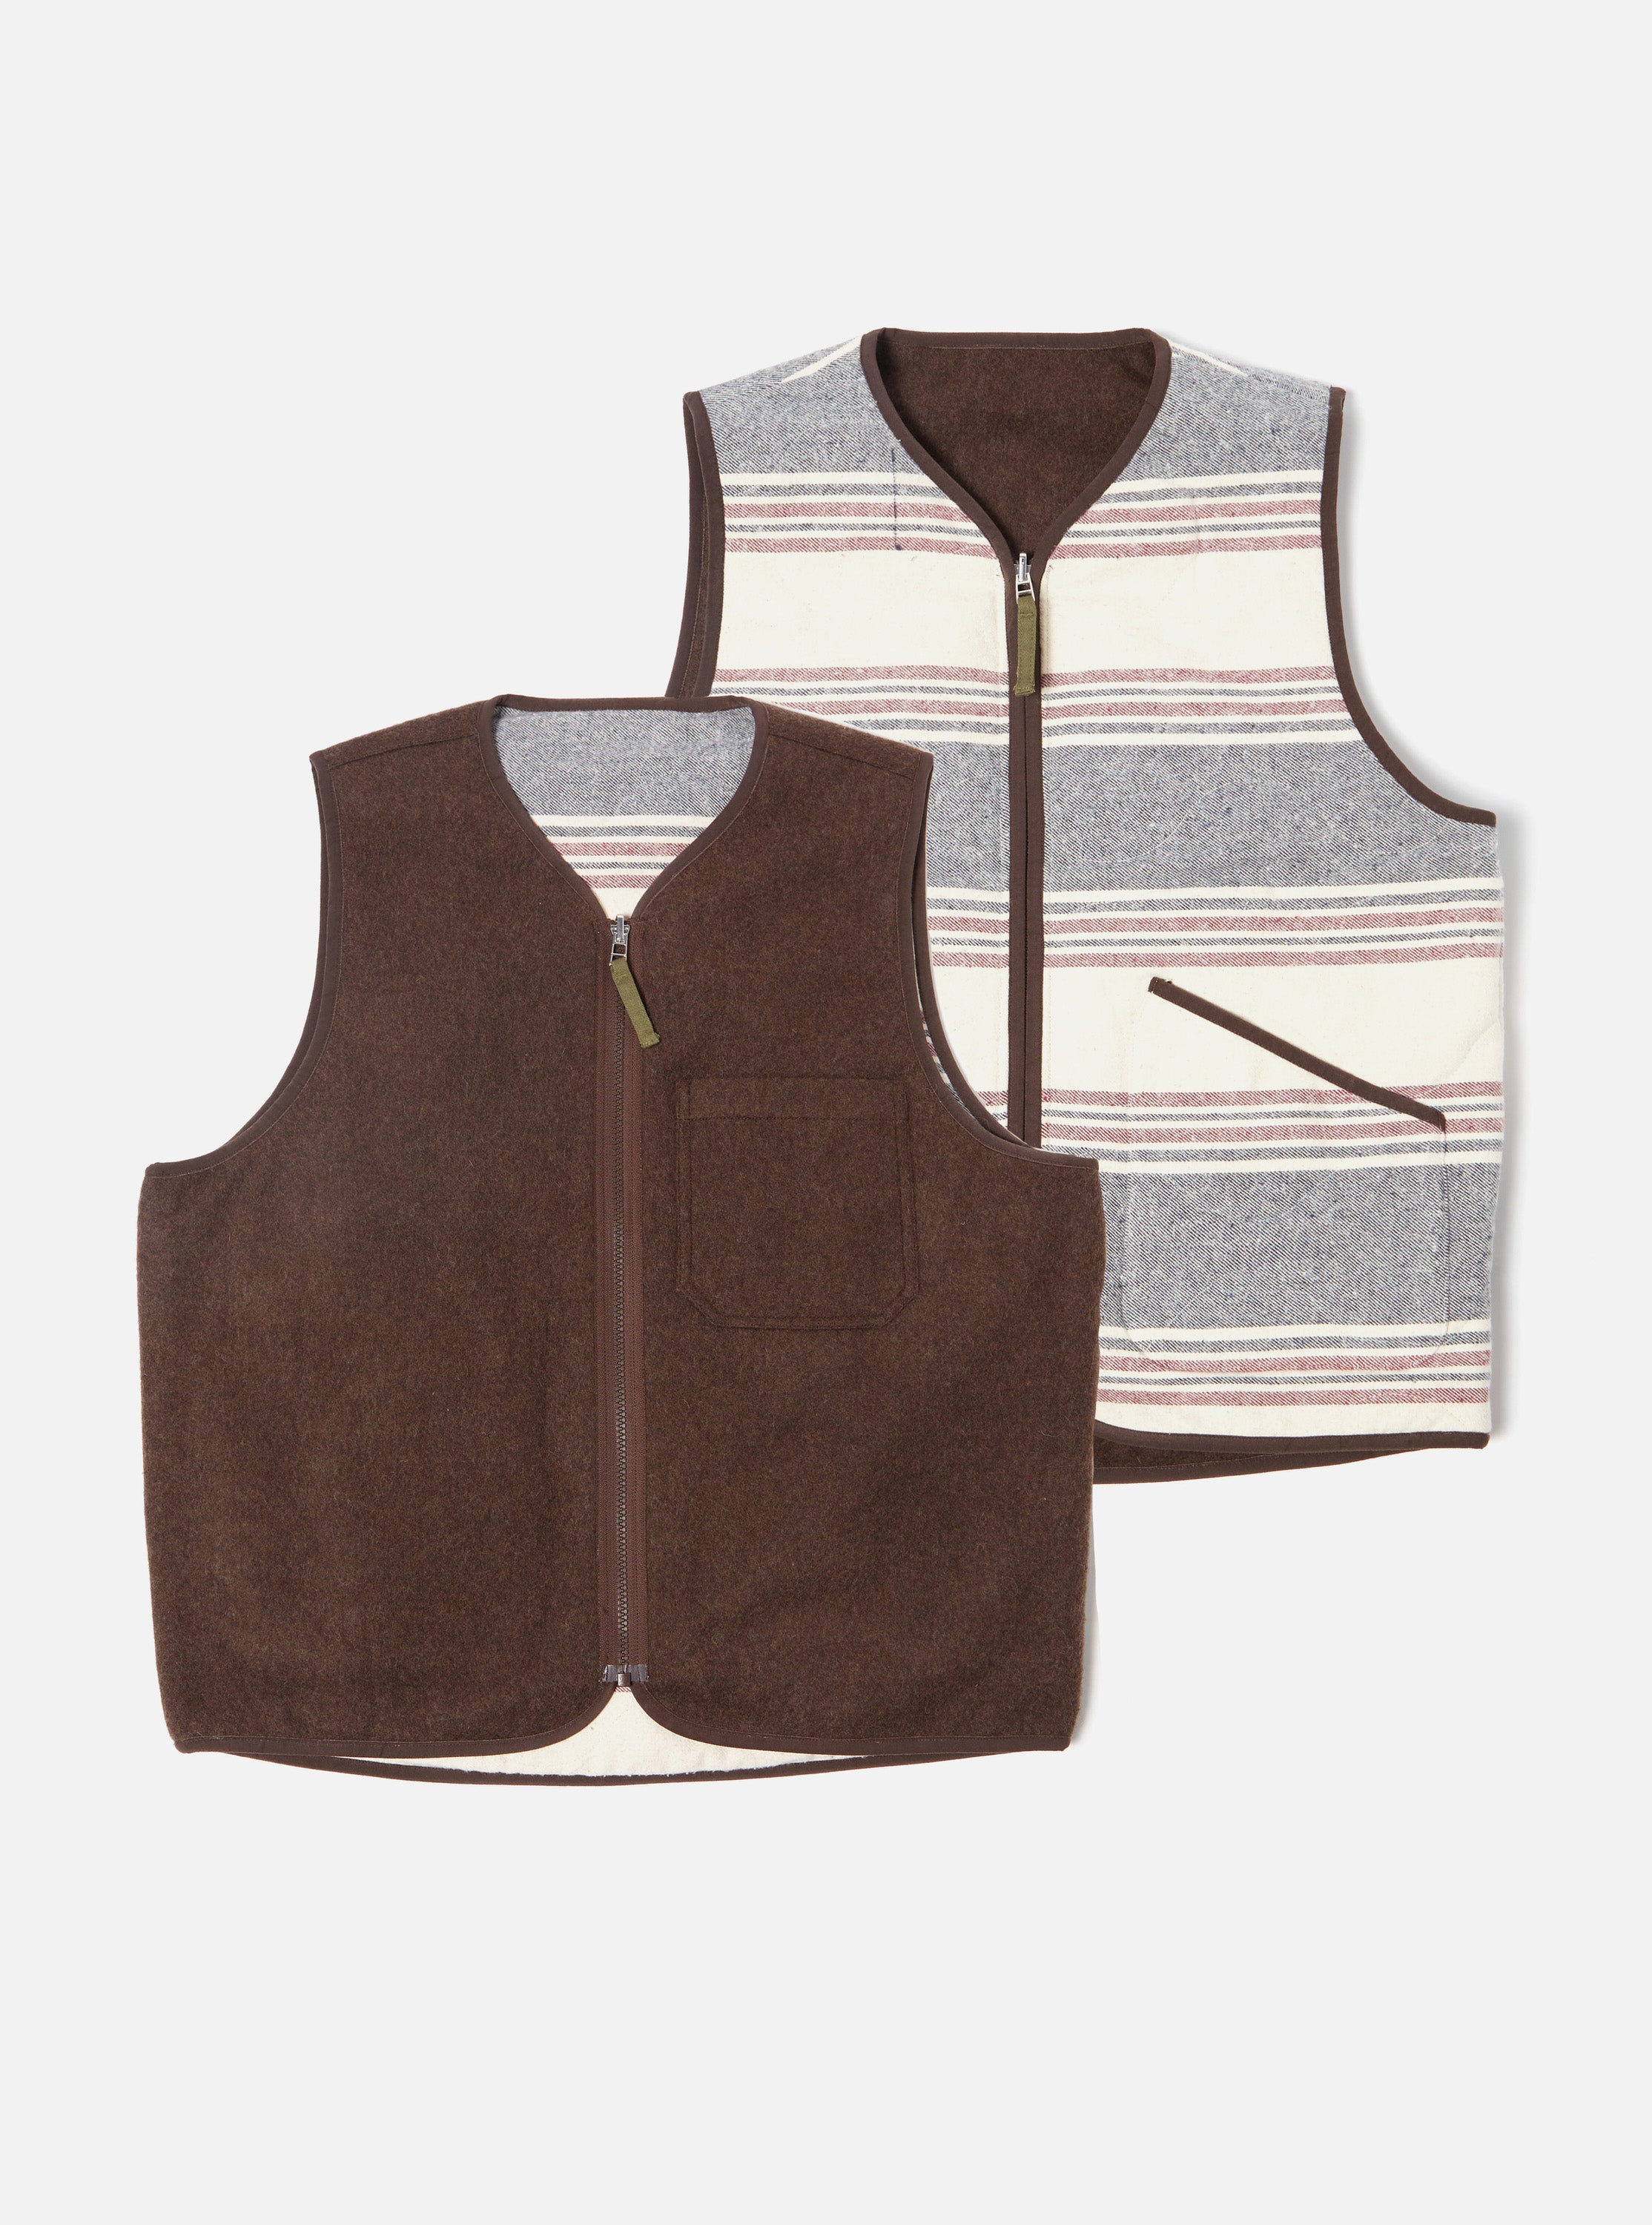 Universal Works Zip Liner Jacket in Brown Soft Wool Cotton Knit